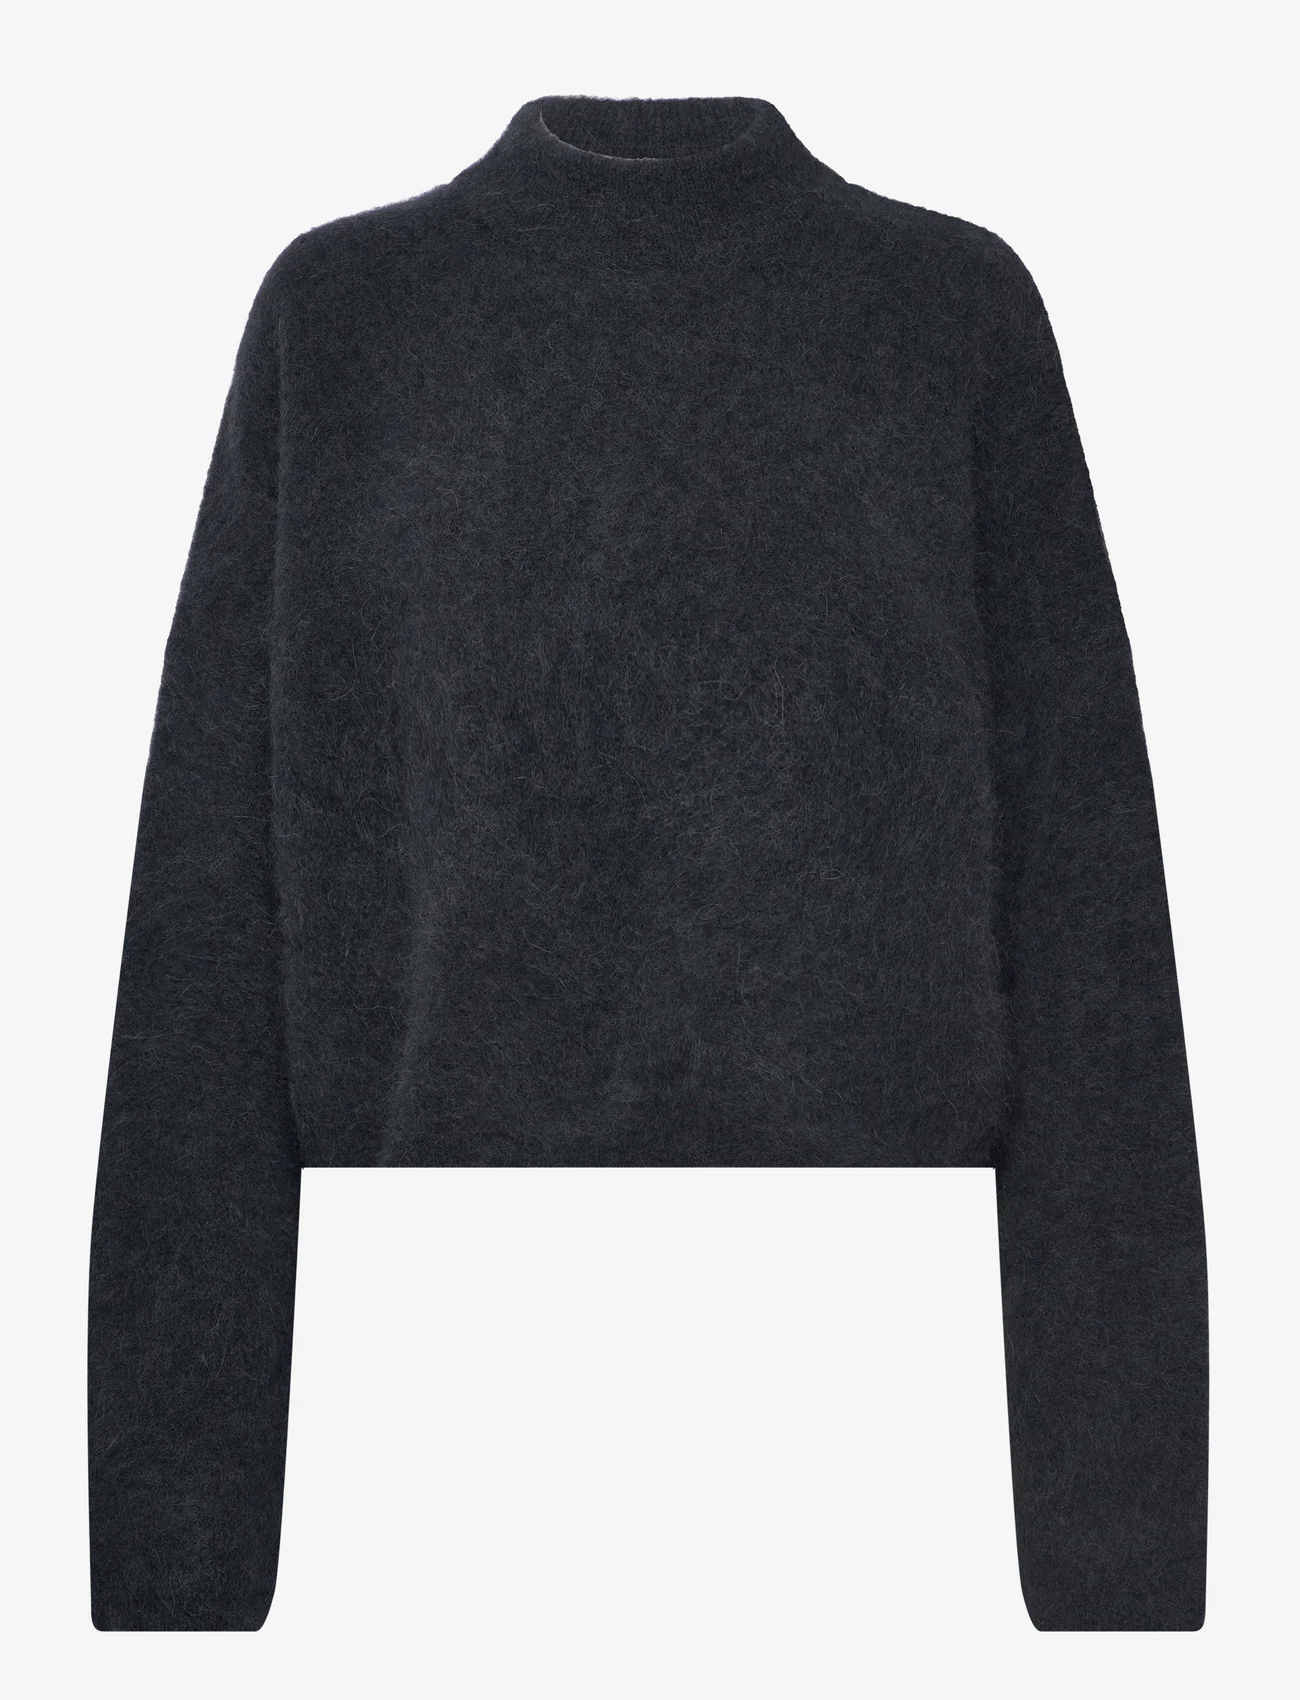 Hope - Boxy Alpaca Sweater - tröjor - washed black - 0